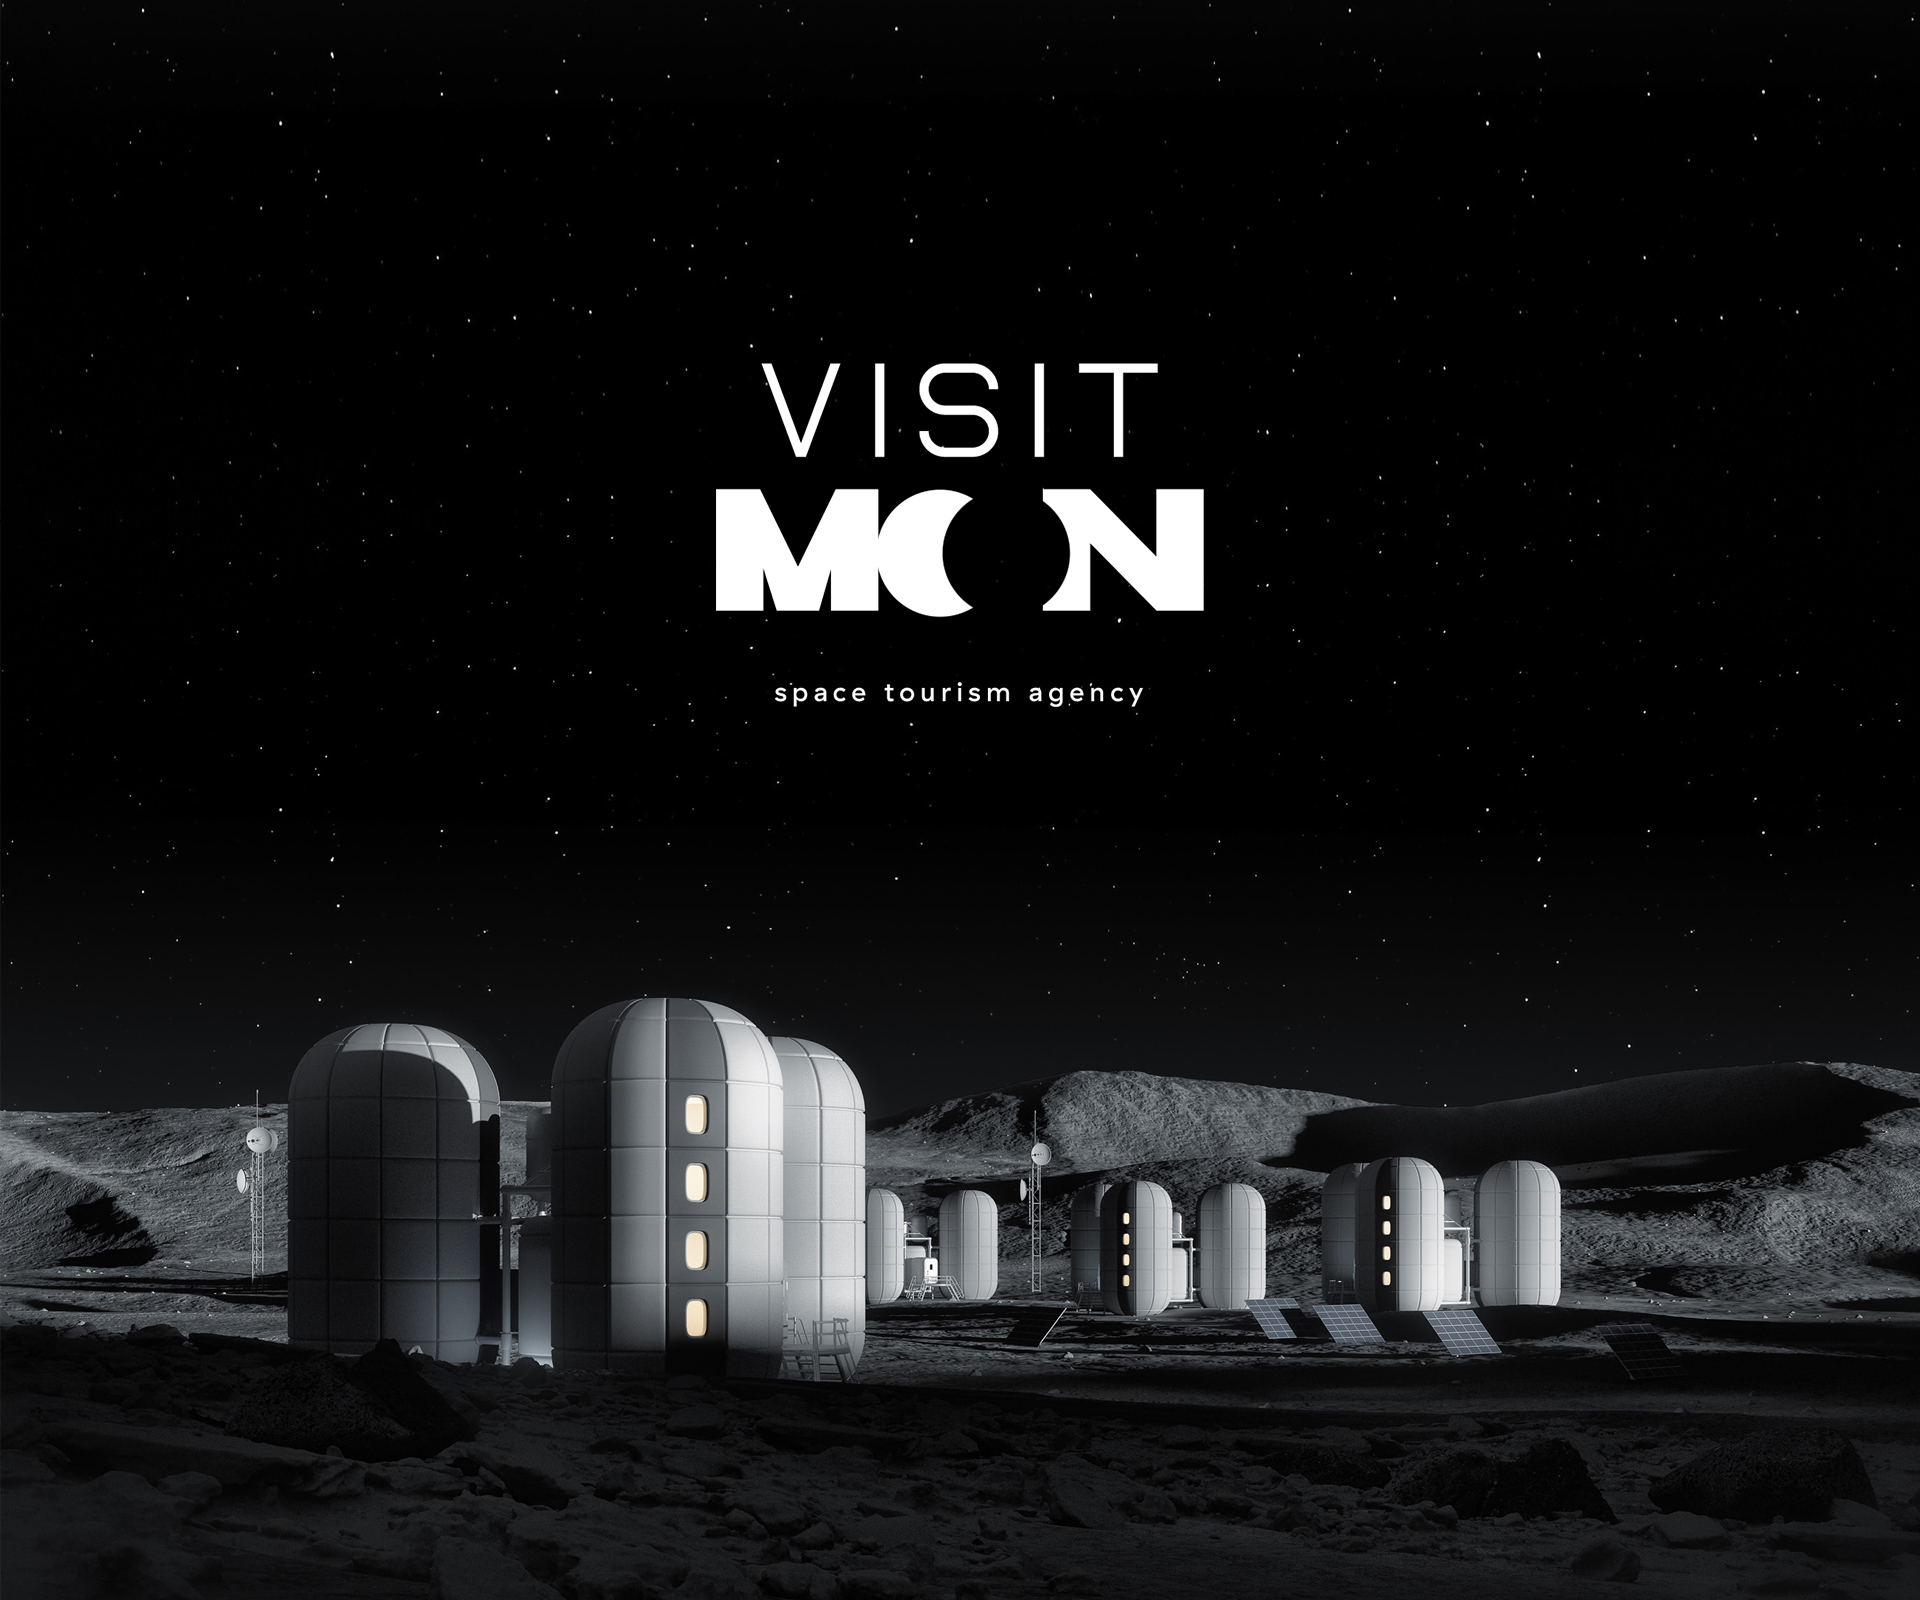 Visitmoon.com a new era for space travel